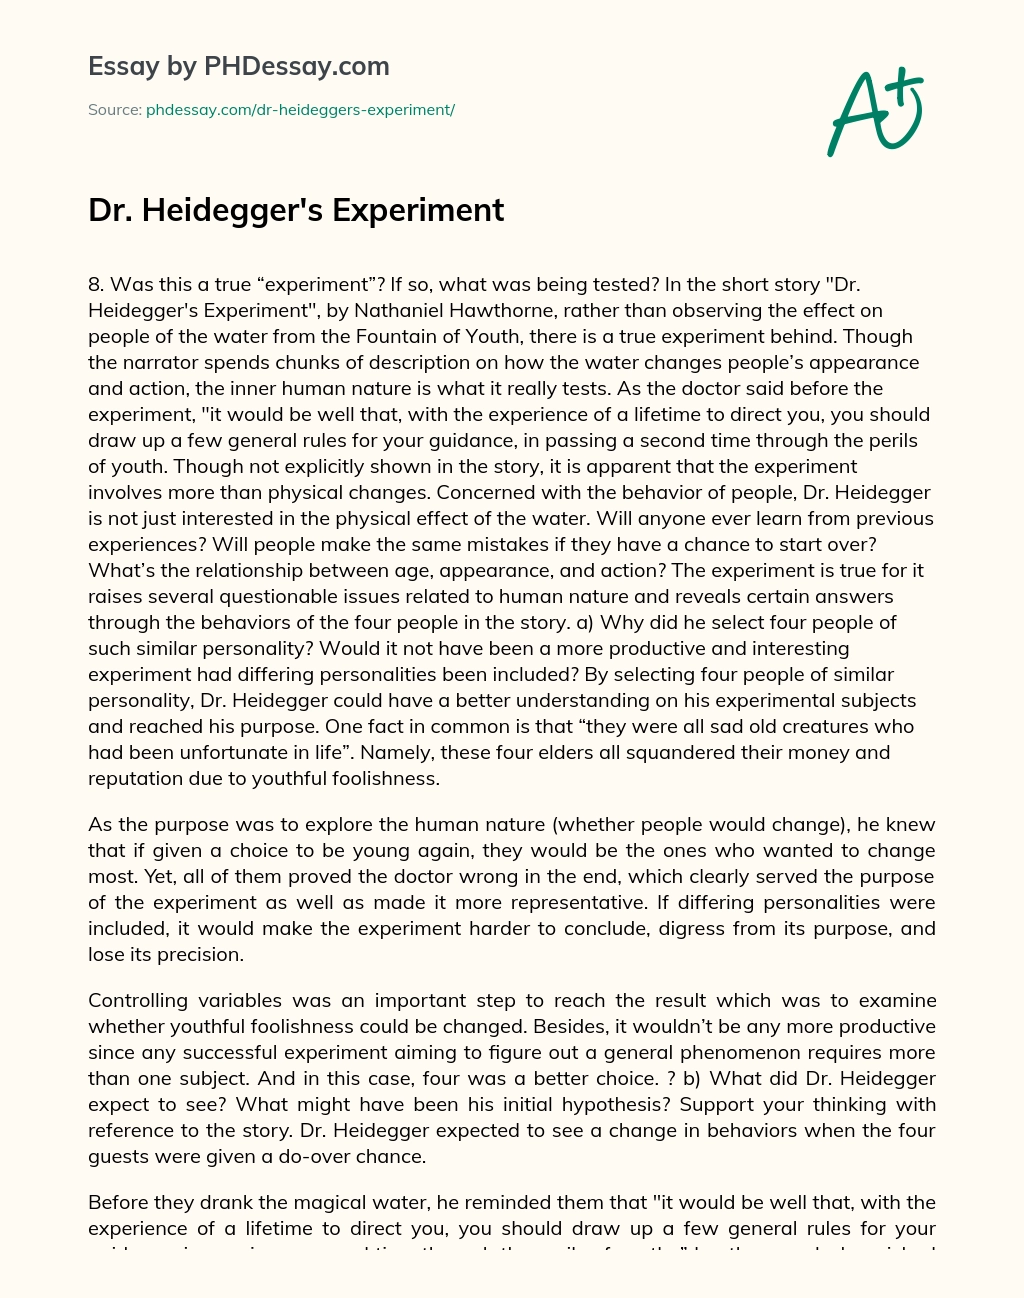 Dr. Heidegger’s Experiment essay